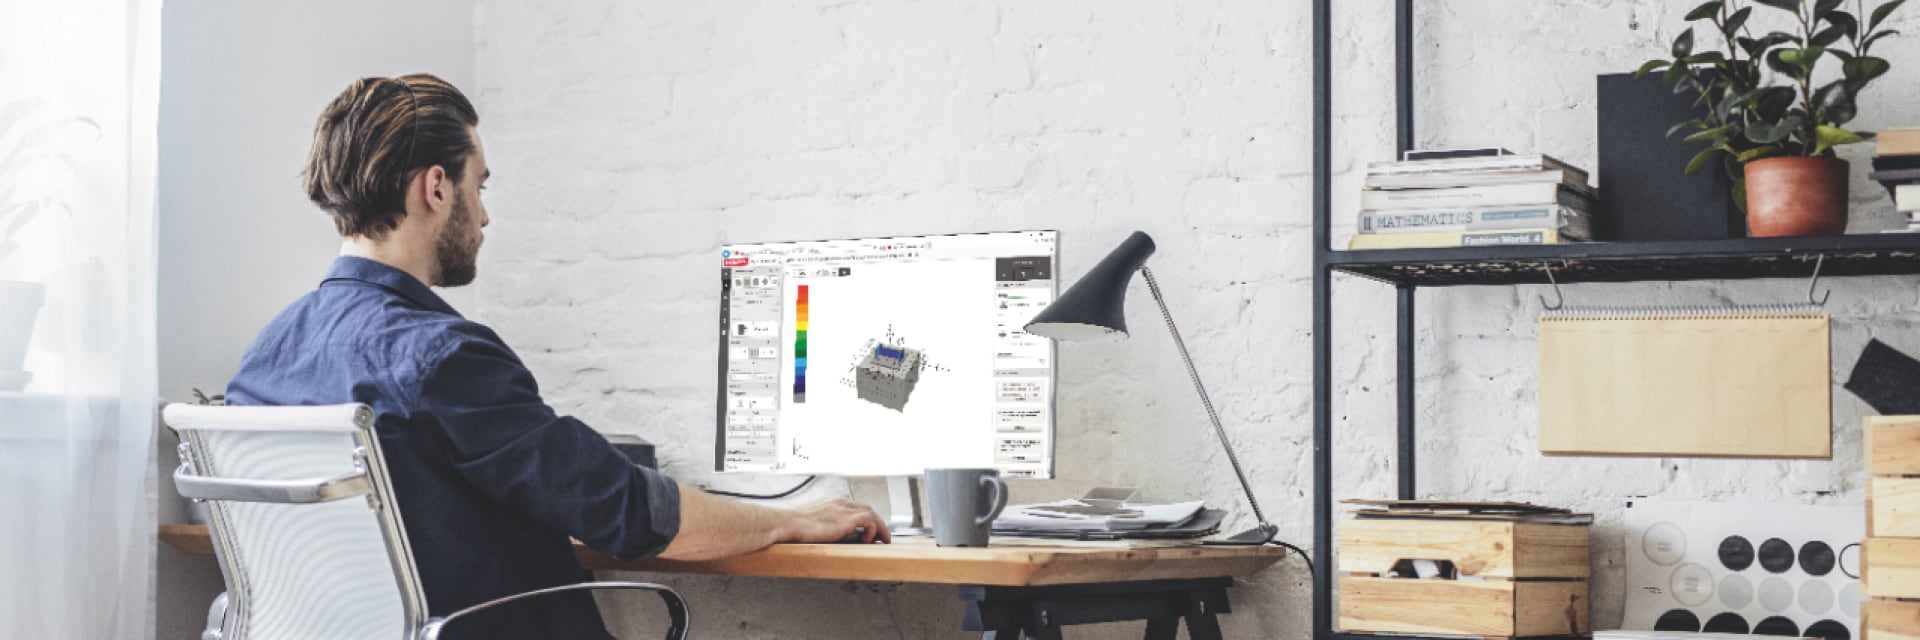 Man sitting at desk looking at anchor design software screen on desktop